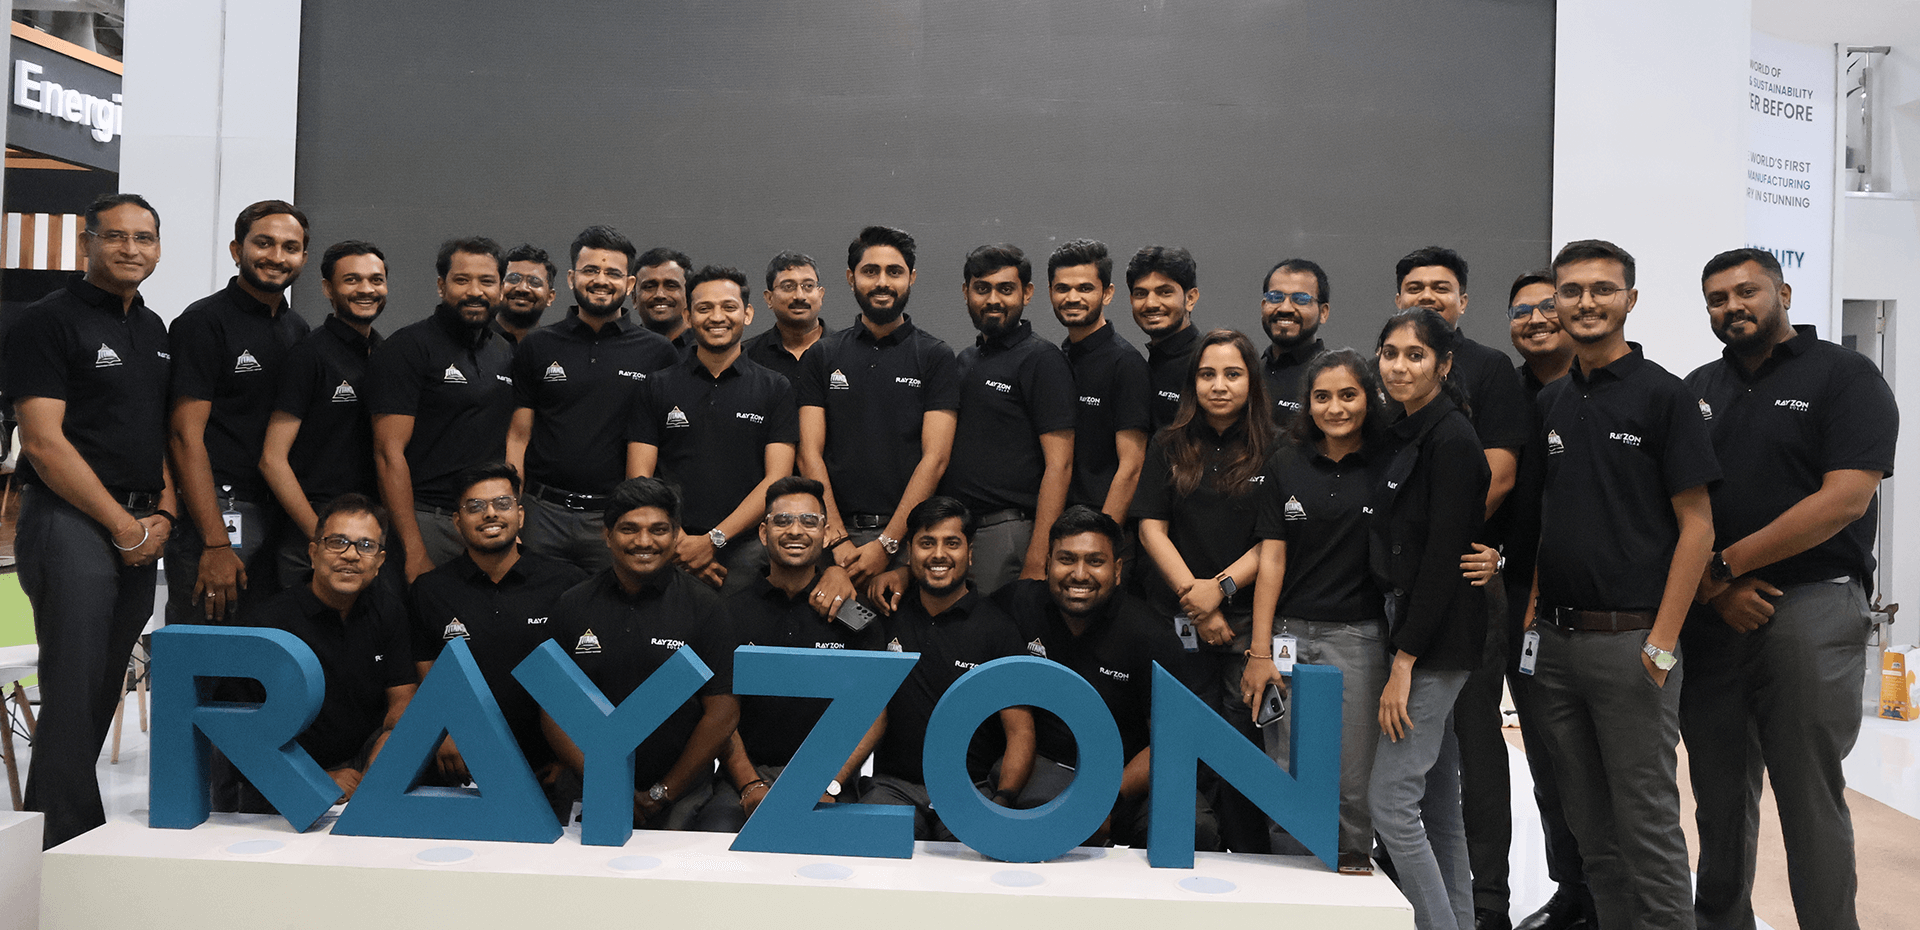 Rayzon Solar - Leading Solar Manufacturer 